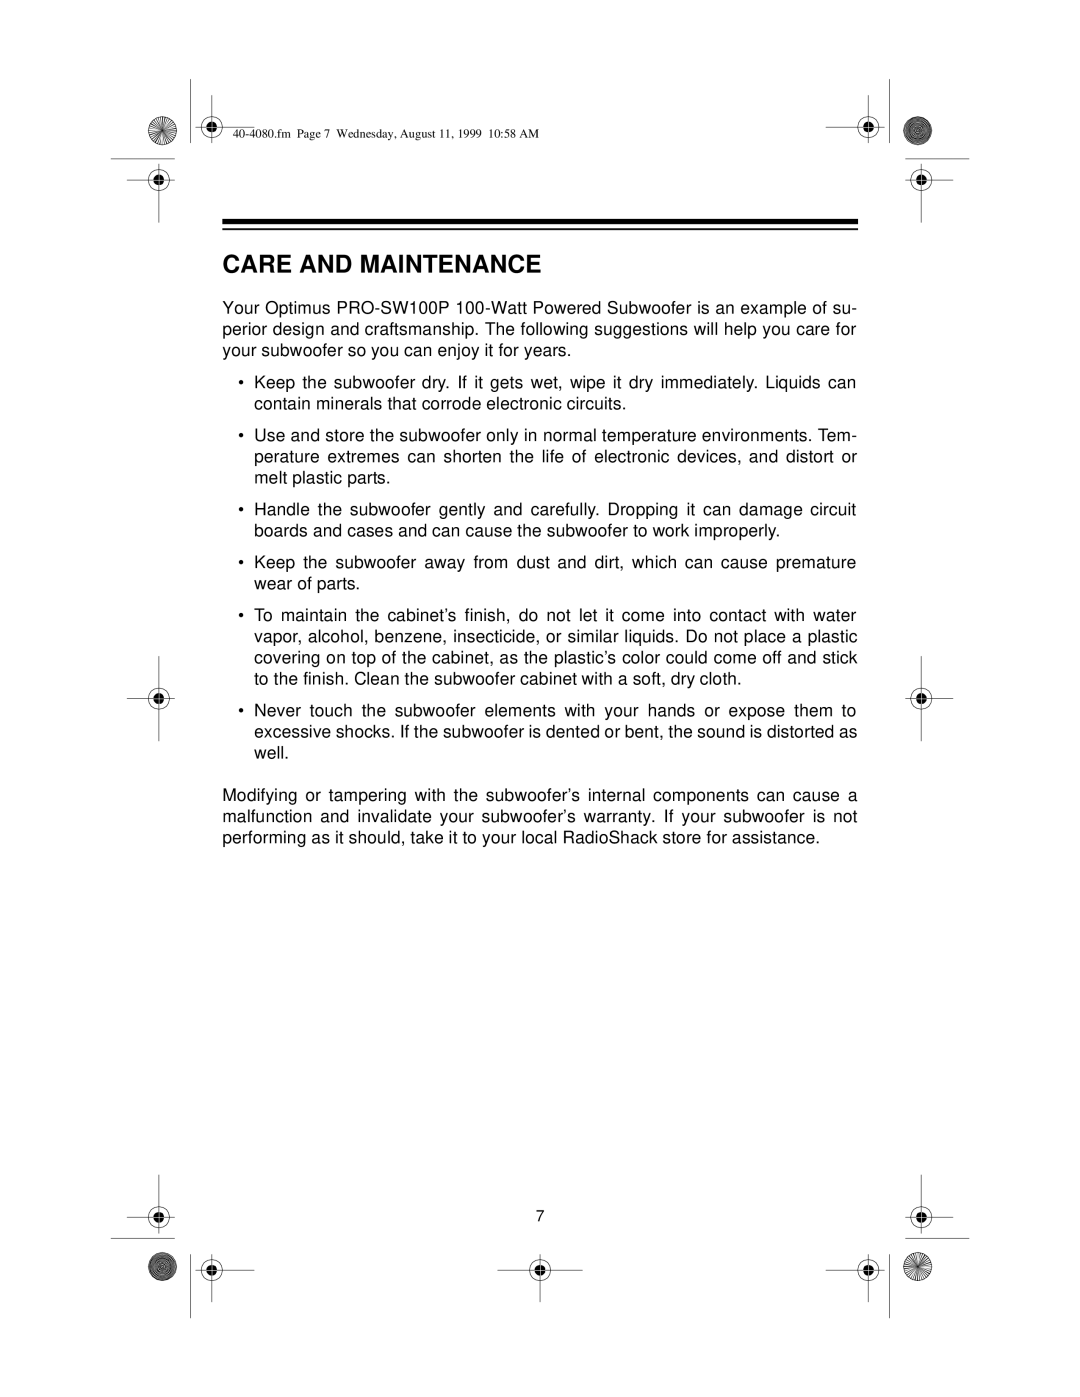 Panasonic PRO-SW100P manual Care And Maintenance 